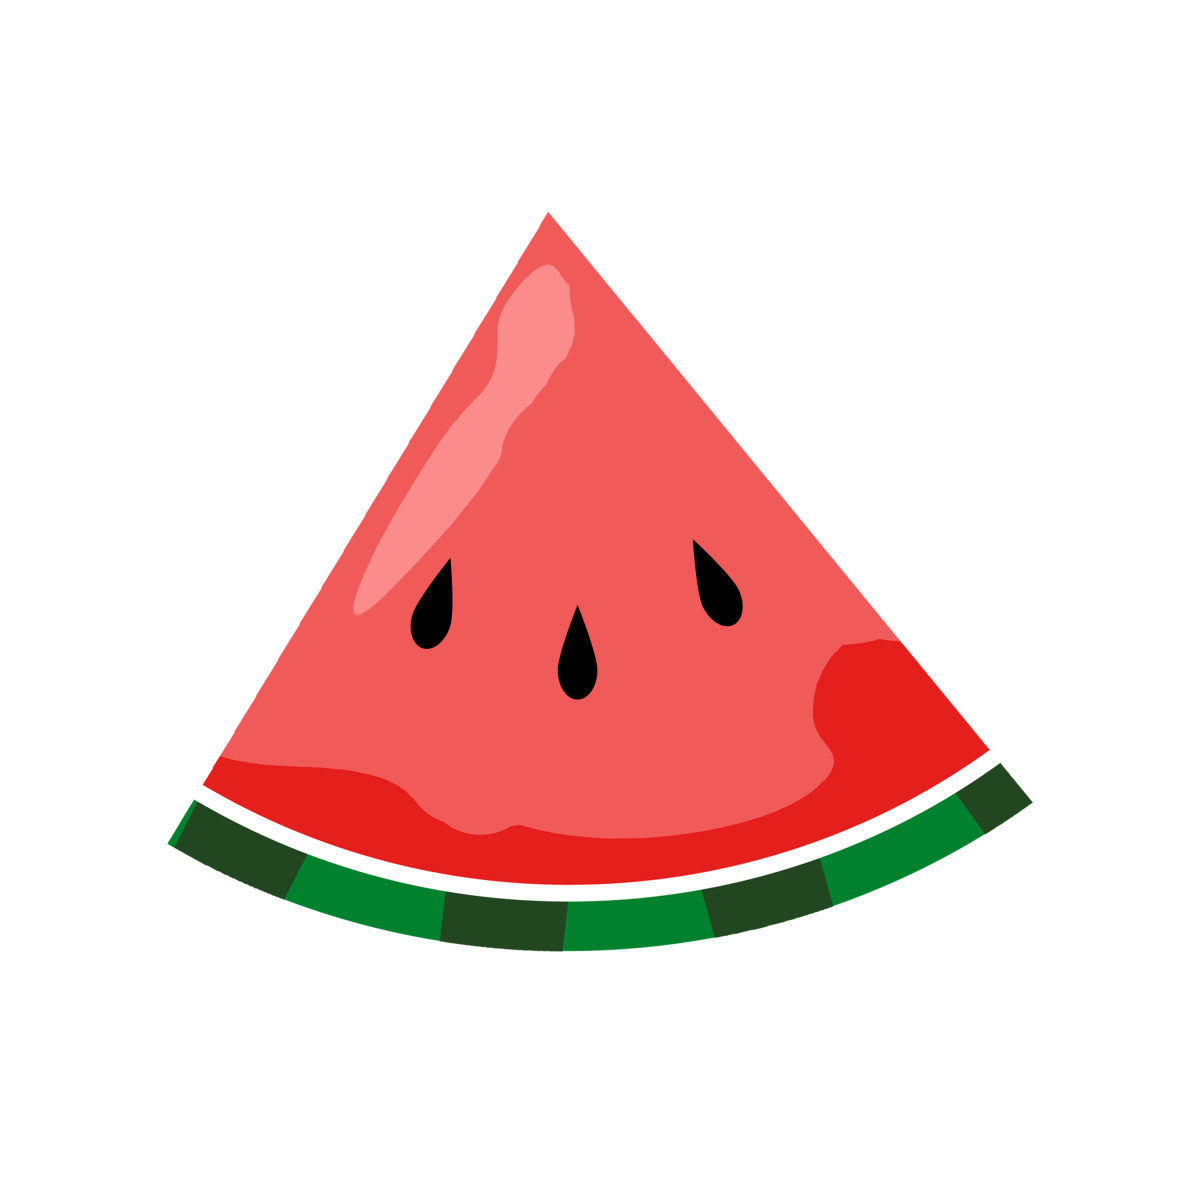 Watermelon clipart 5 - Watermelon Clip Art